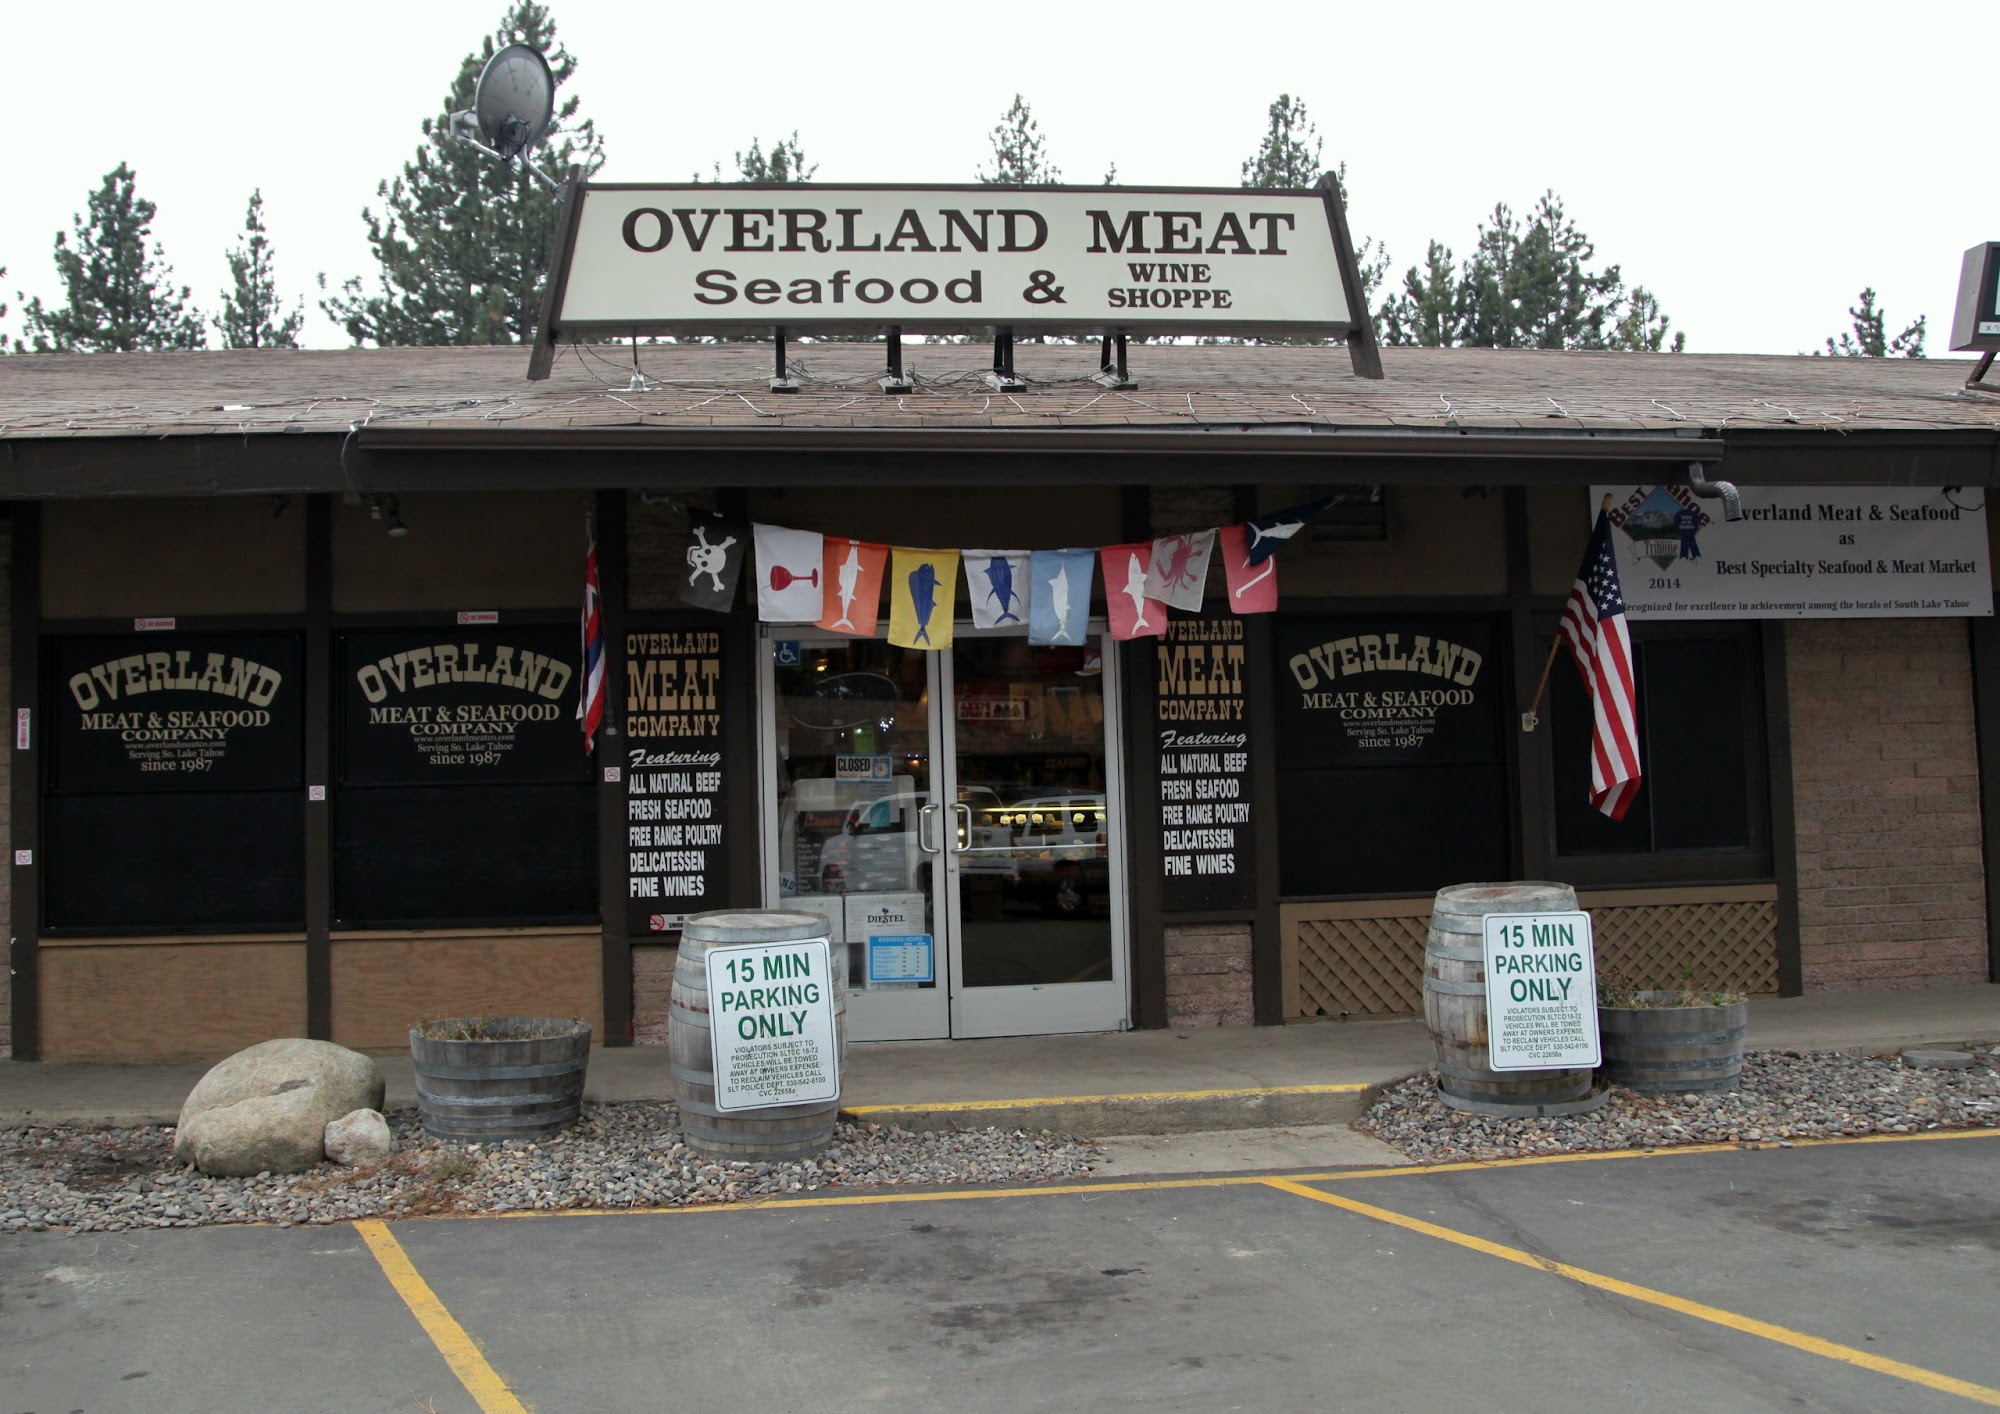 Overland Meat & Seafood Company